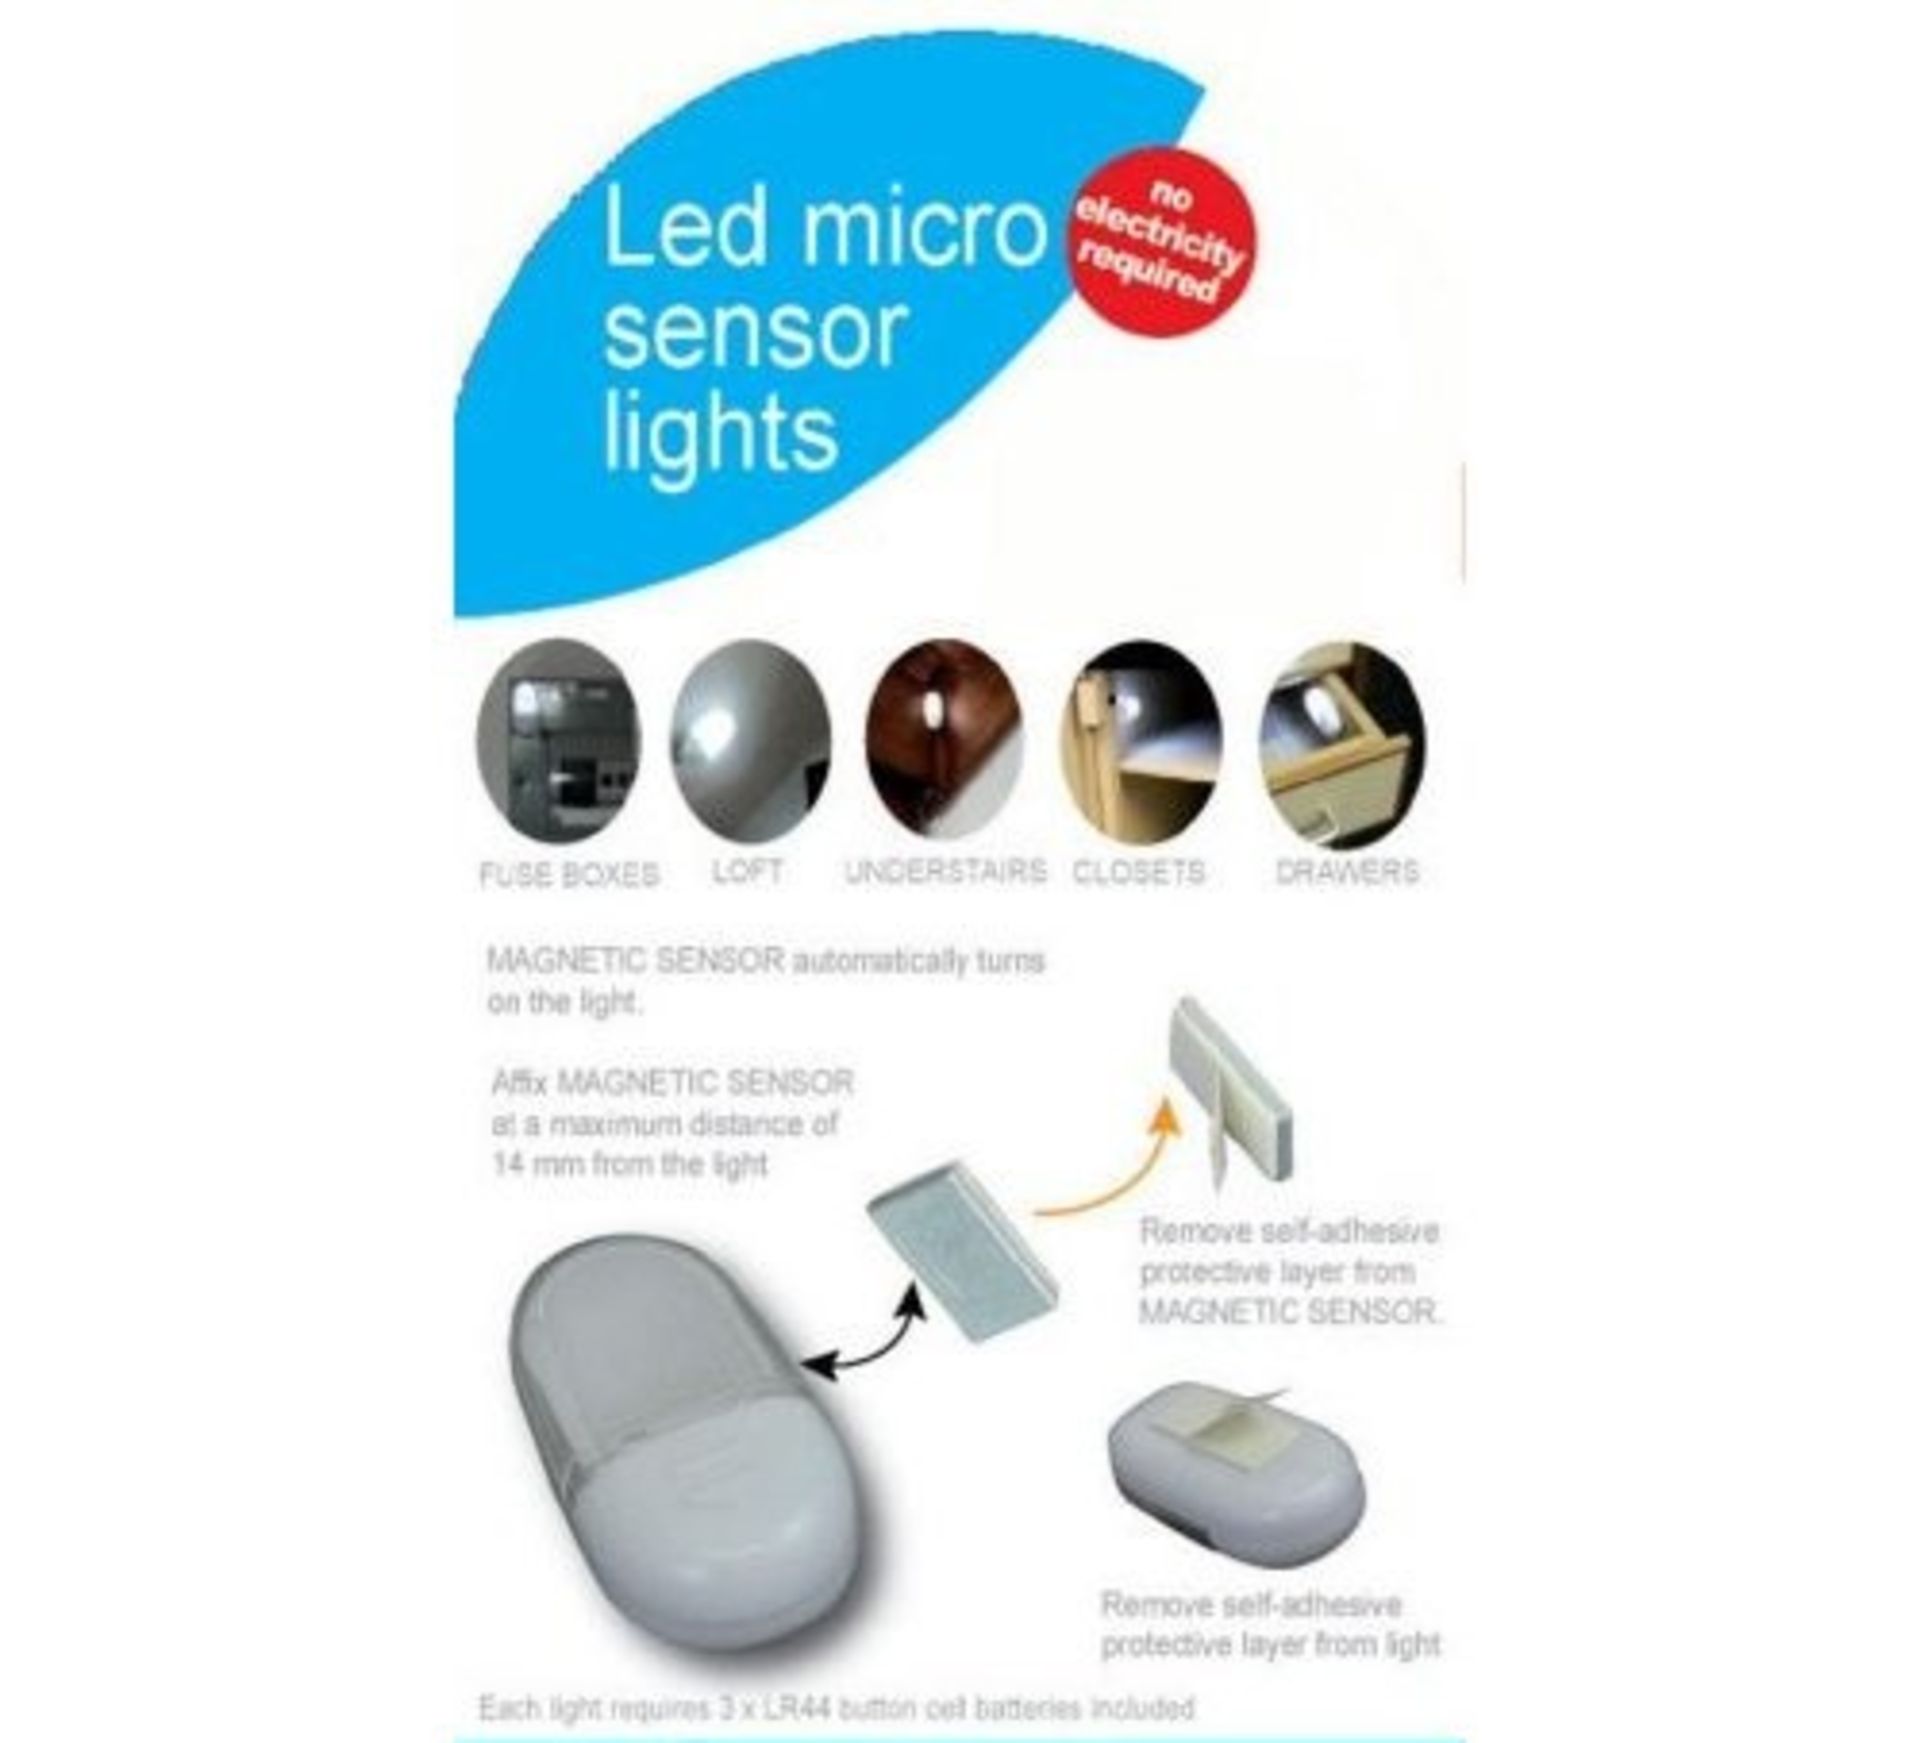 V *TRADE QTY* Brand New Tritronic LED Micro Sensor Lights - Magnetic Sensors - No Electricity